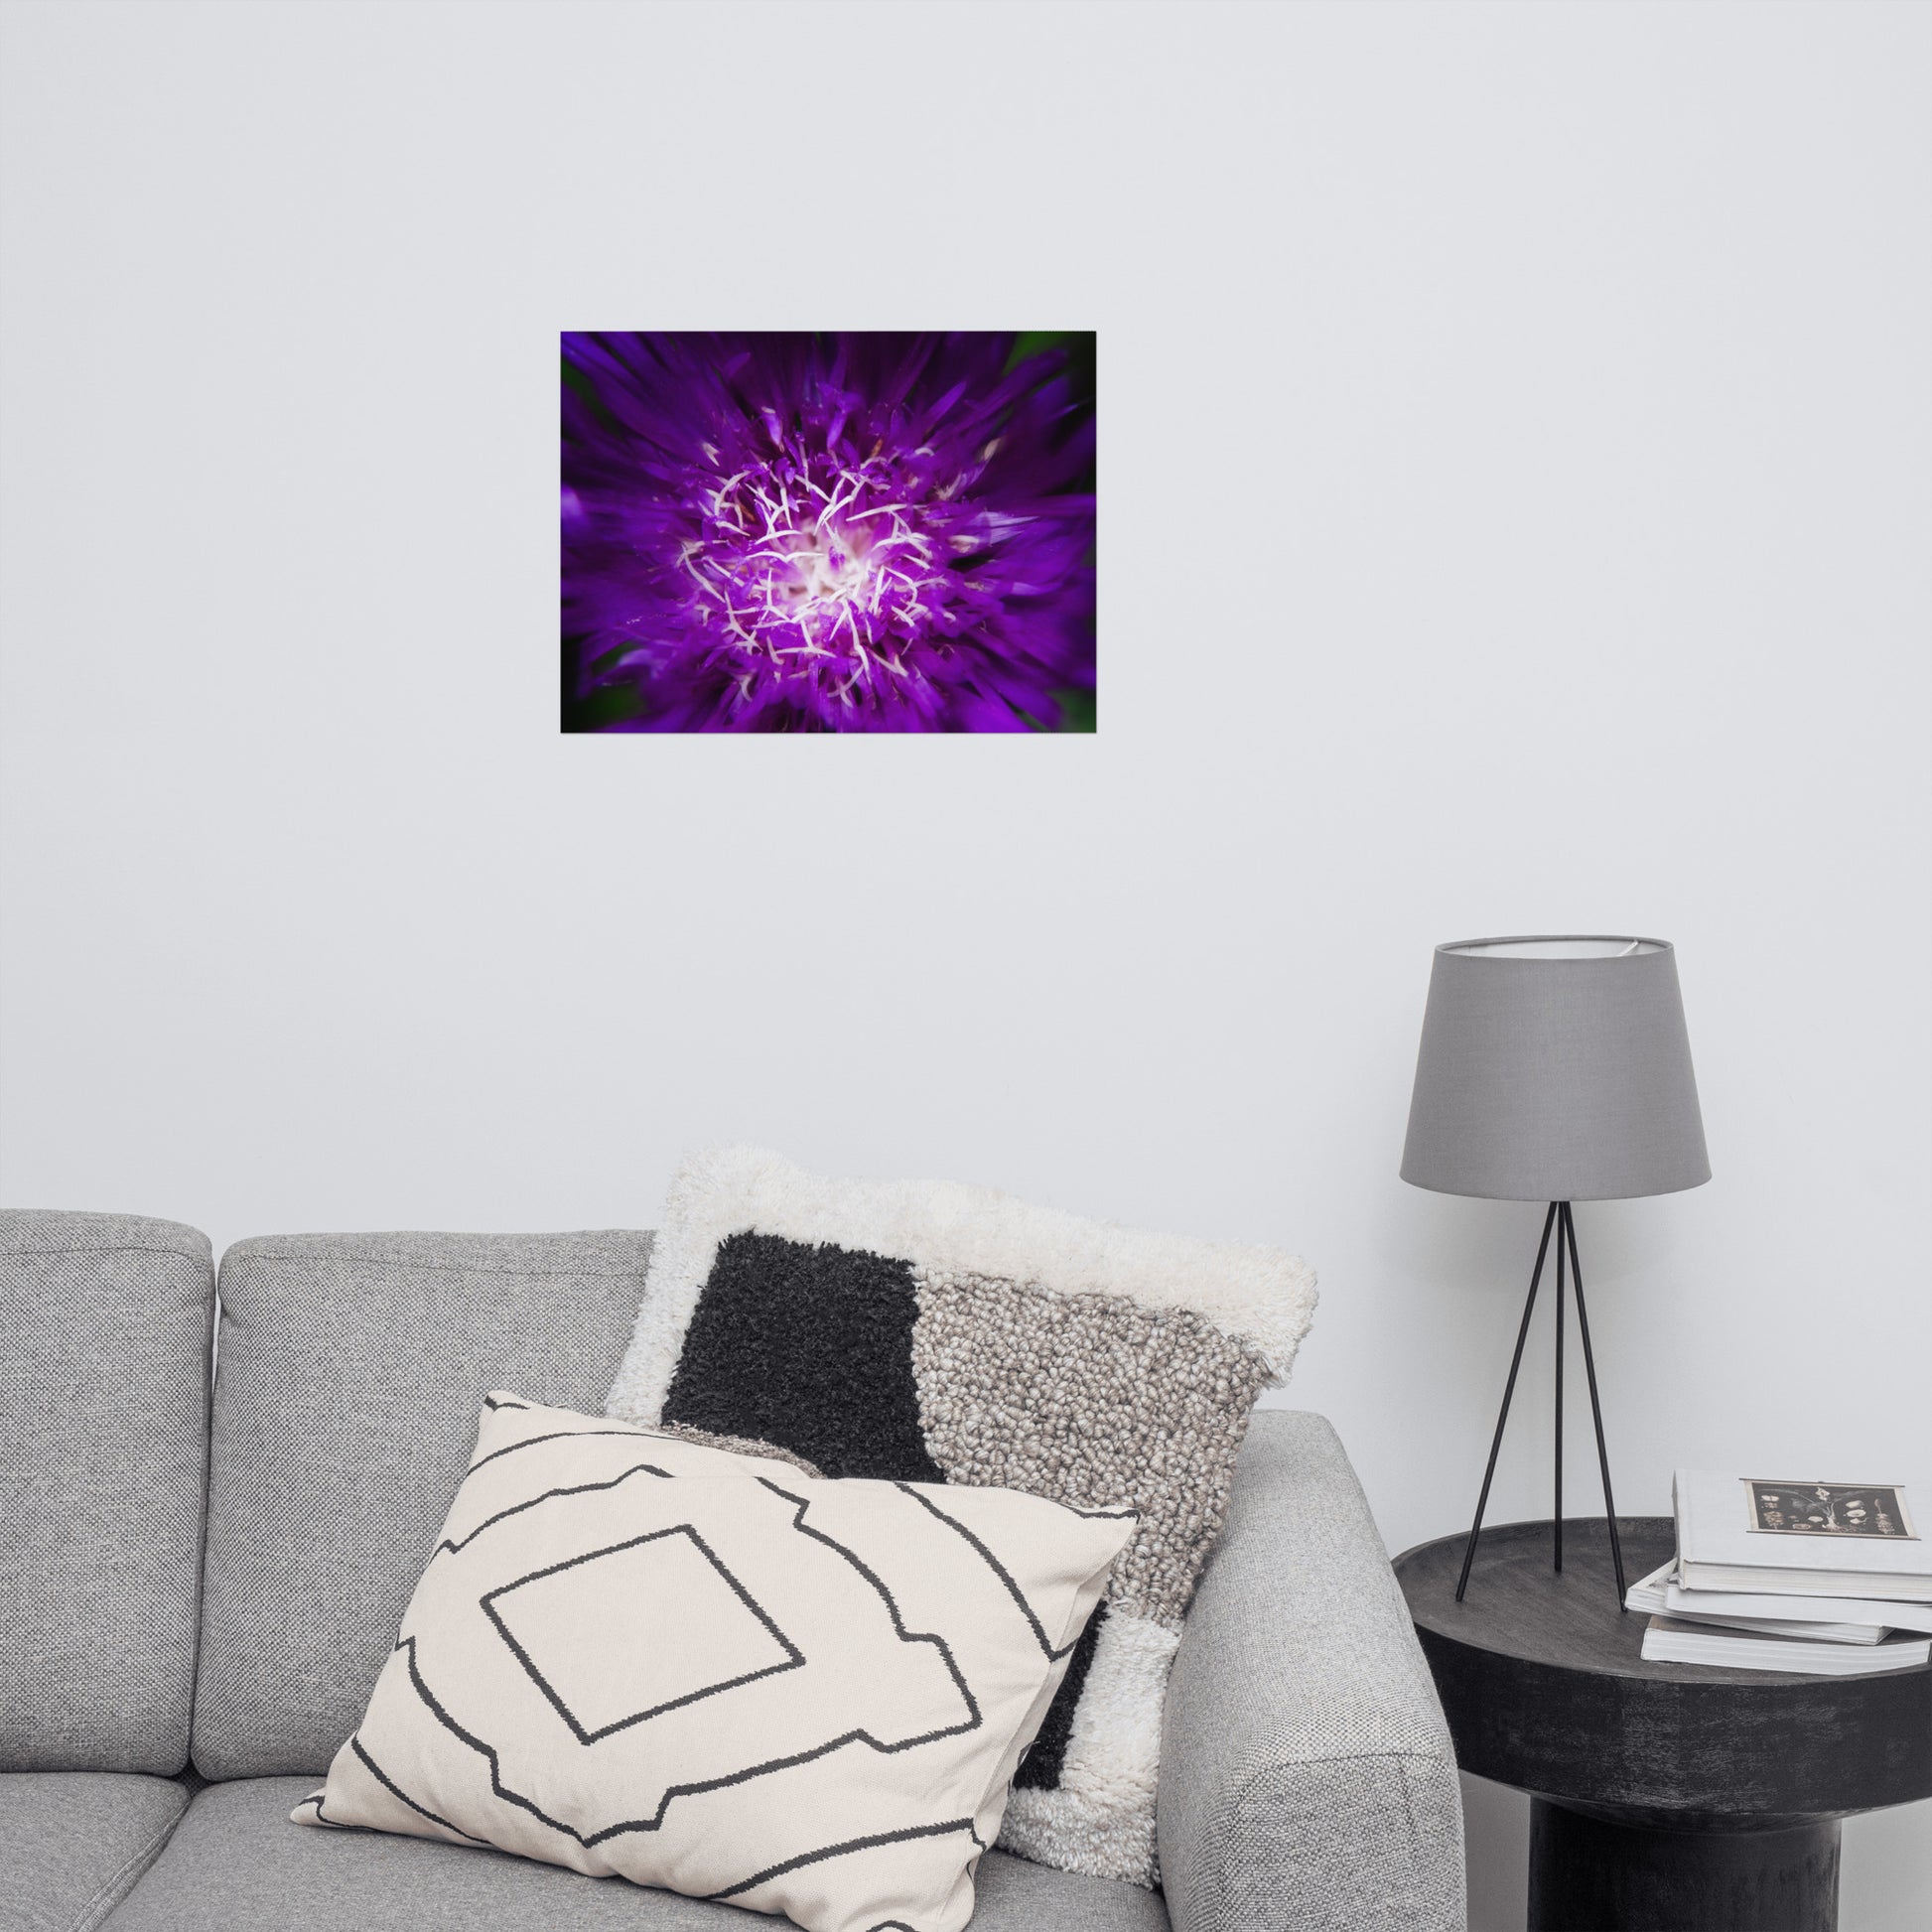 Living Room Nature Art: Dark Purple and White Aster Bloom Close-up - Botanical / Floral / Flora / Flowers / Nature Photograph Loose / Unframed / Frameless / Frameable Wall Art Print - Artwork